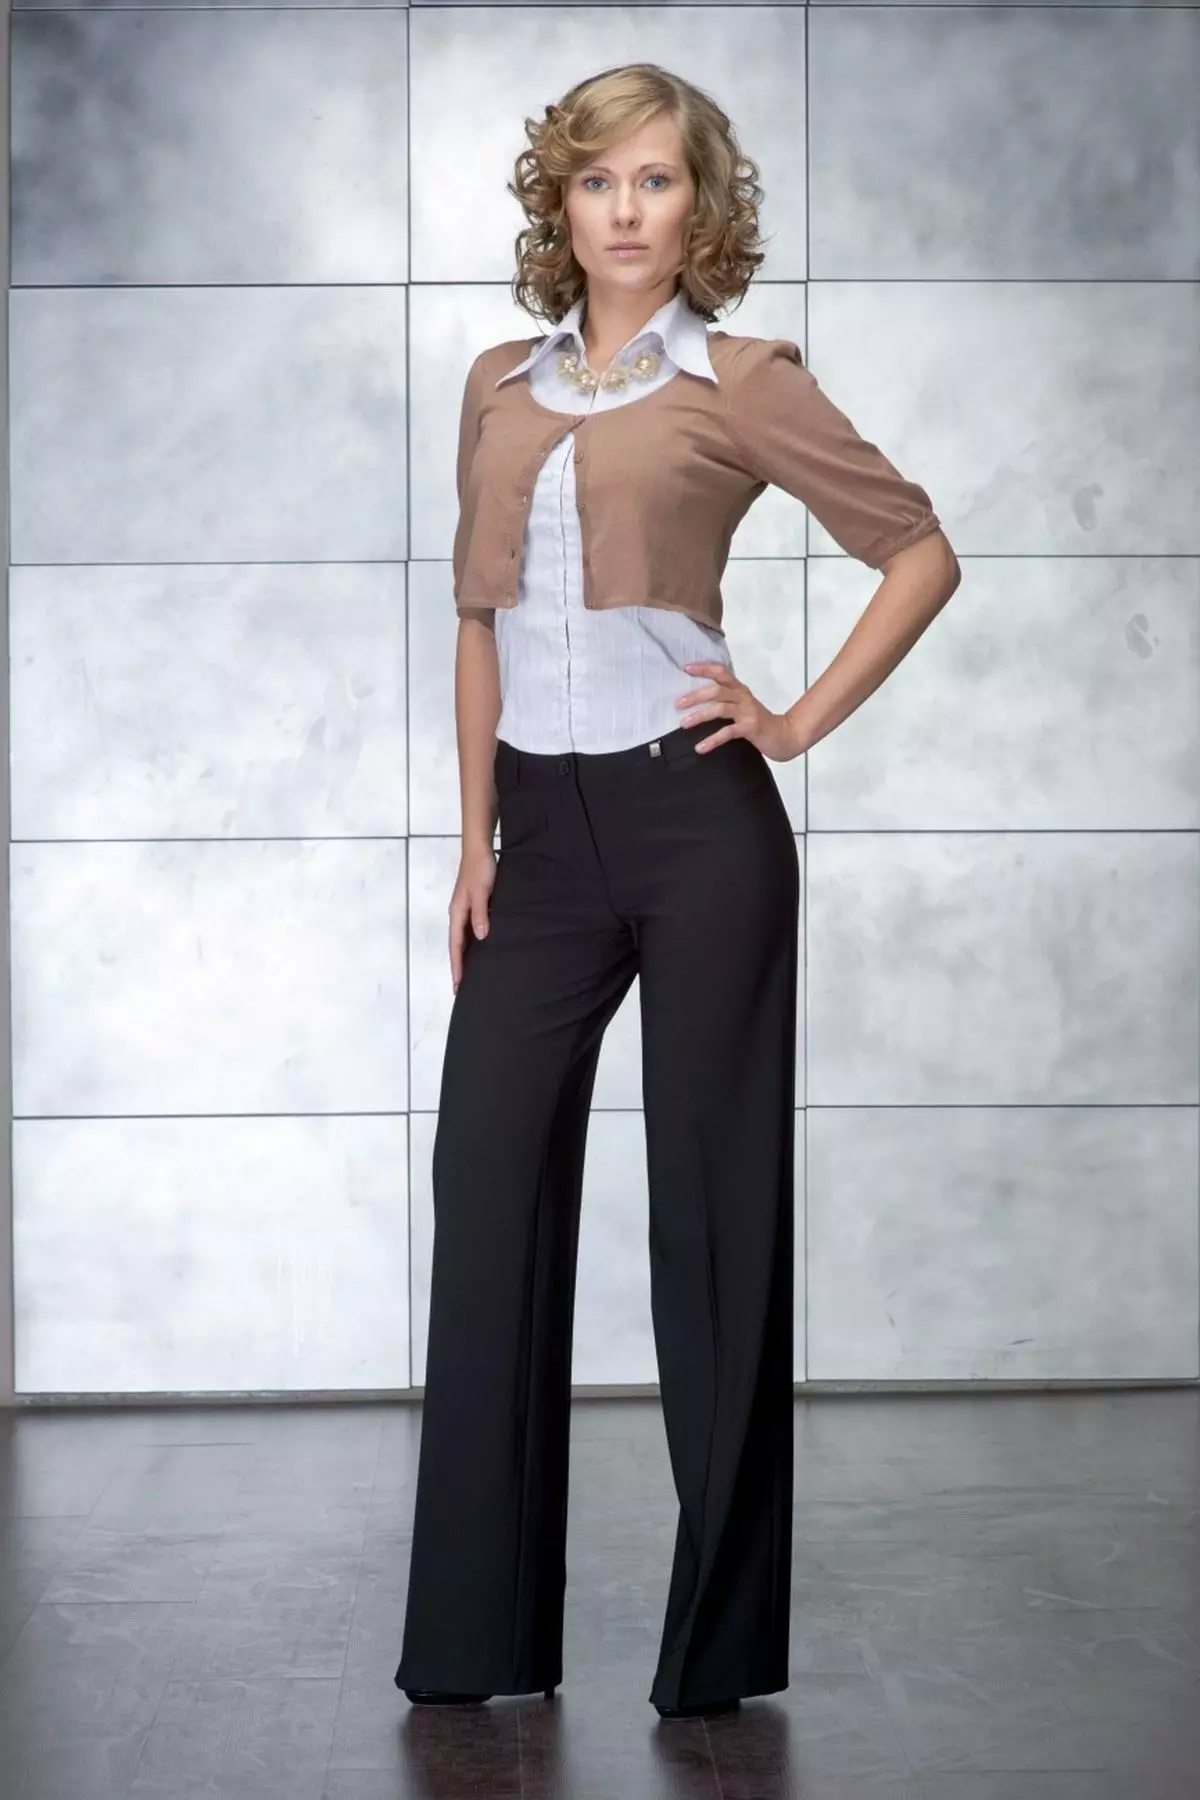 Pantalones de moda 2021: modelos elegantes de mujeres, tendencias de moda 917_386